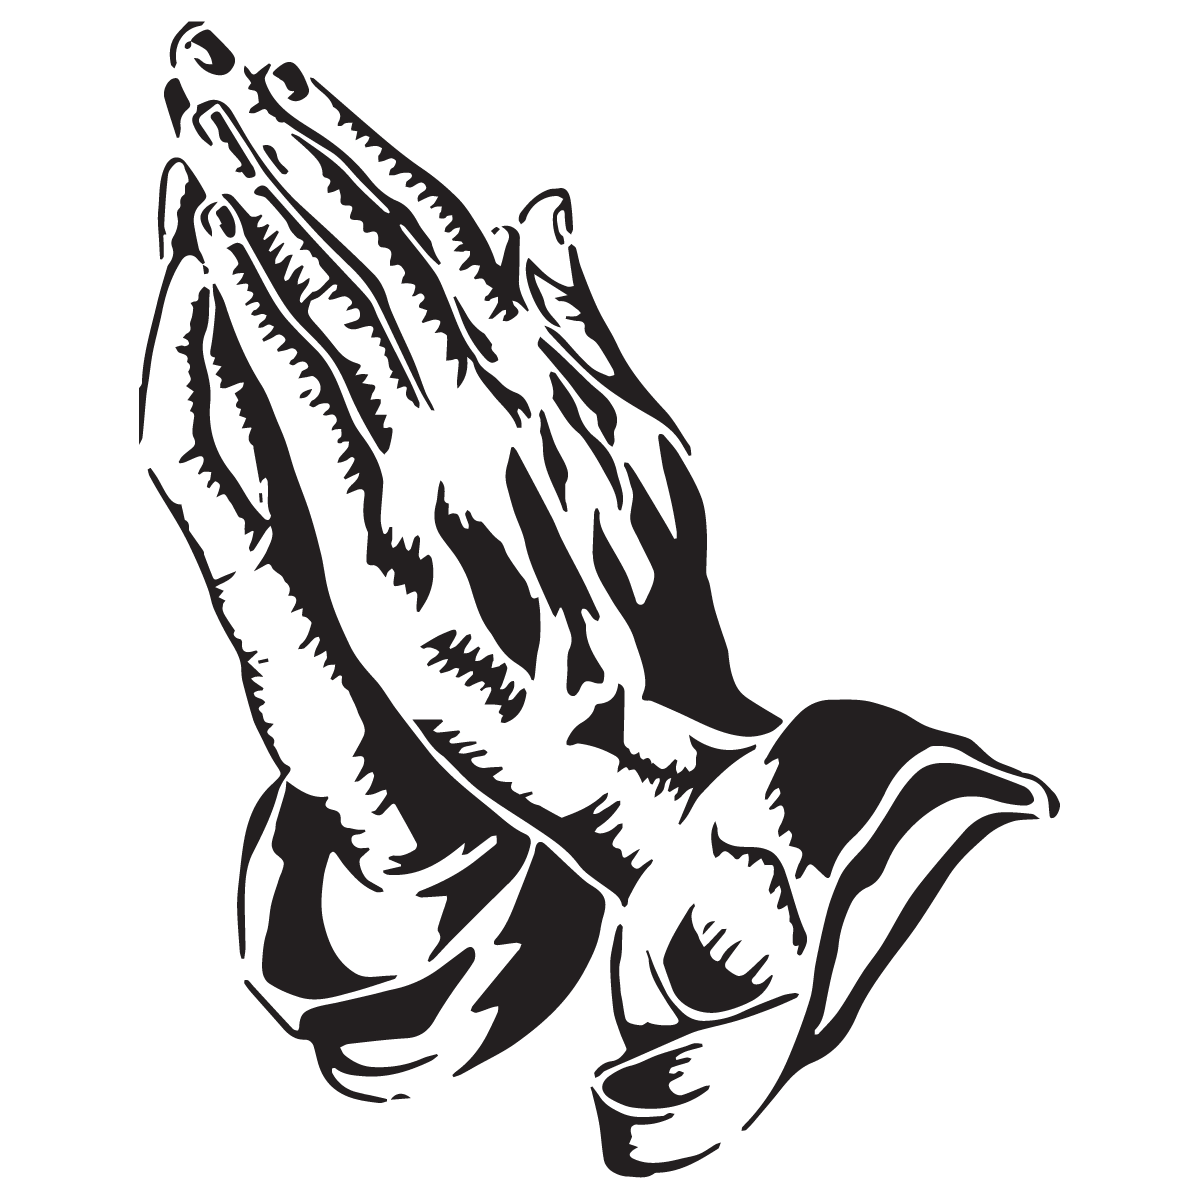 Praying hands religion drawing. Pray clipart prayer indian